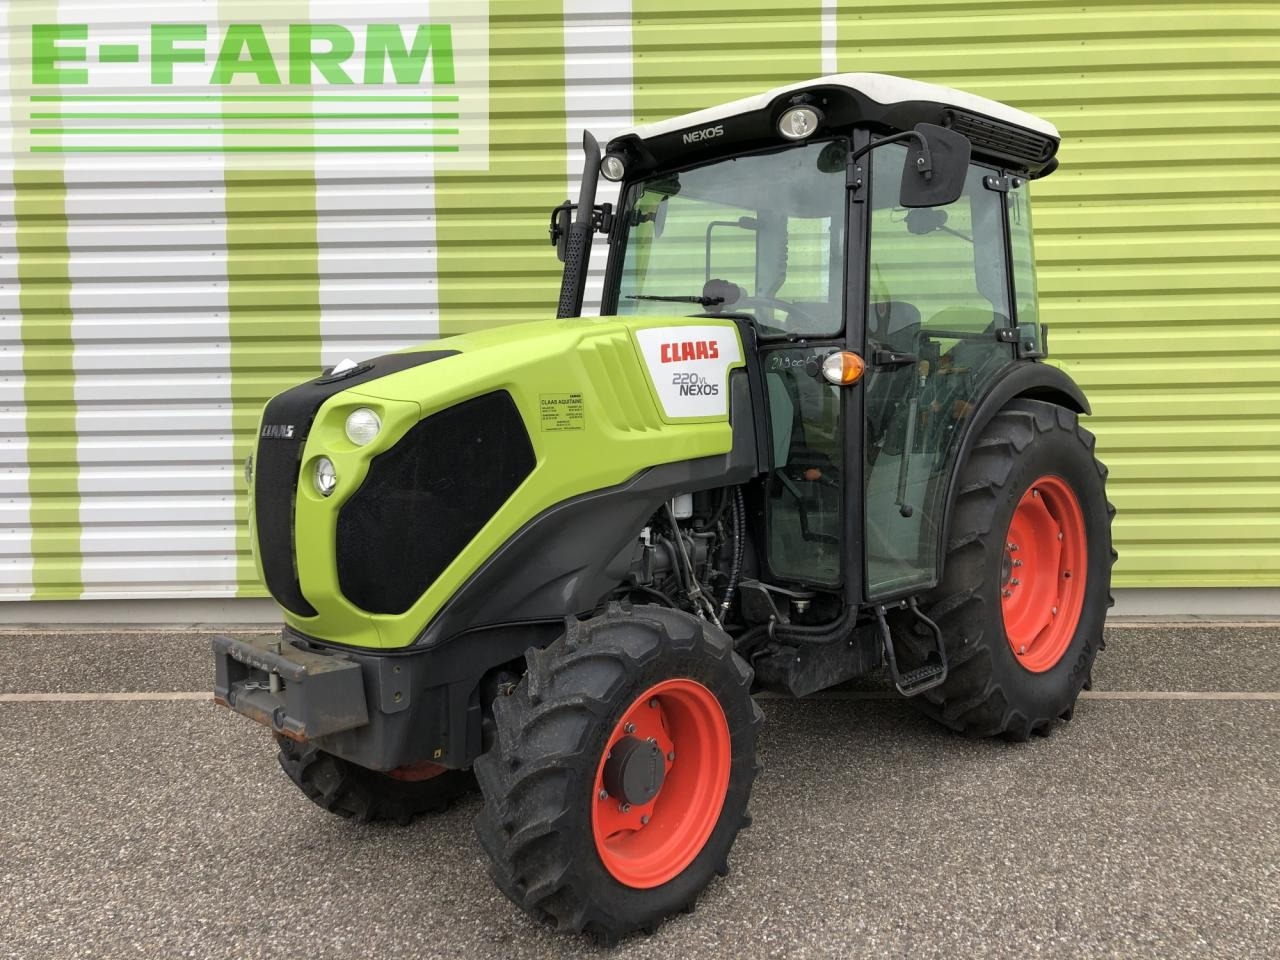 Farm tractor CLAAS nexos 220 vl